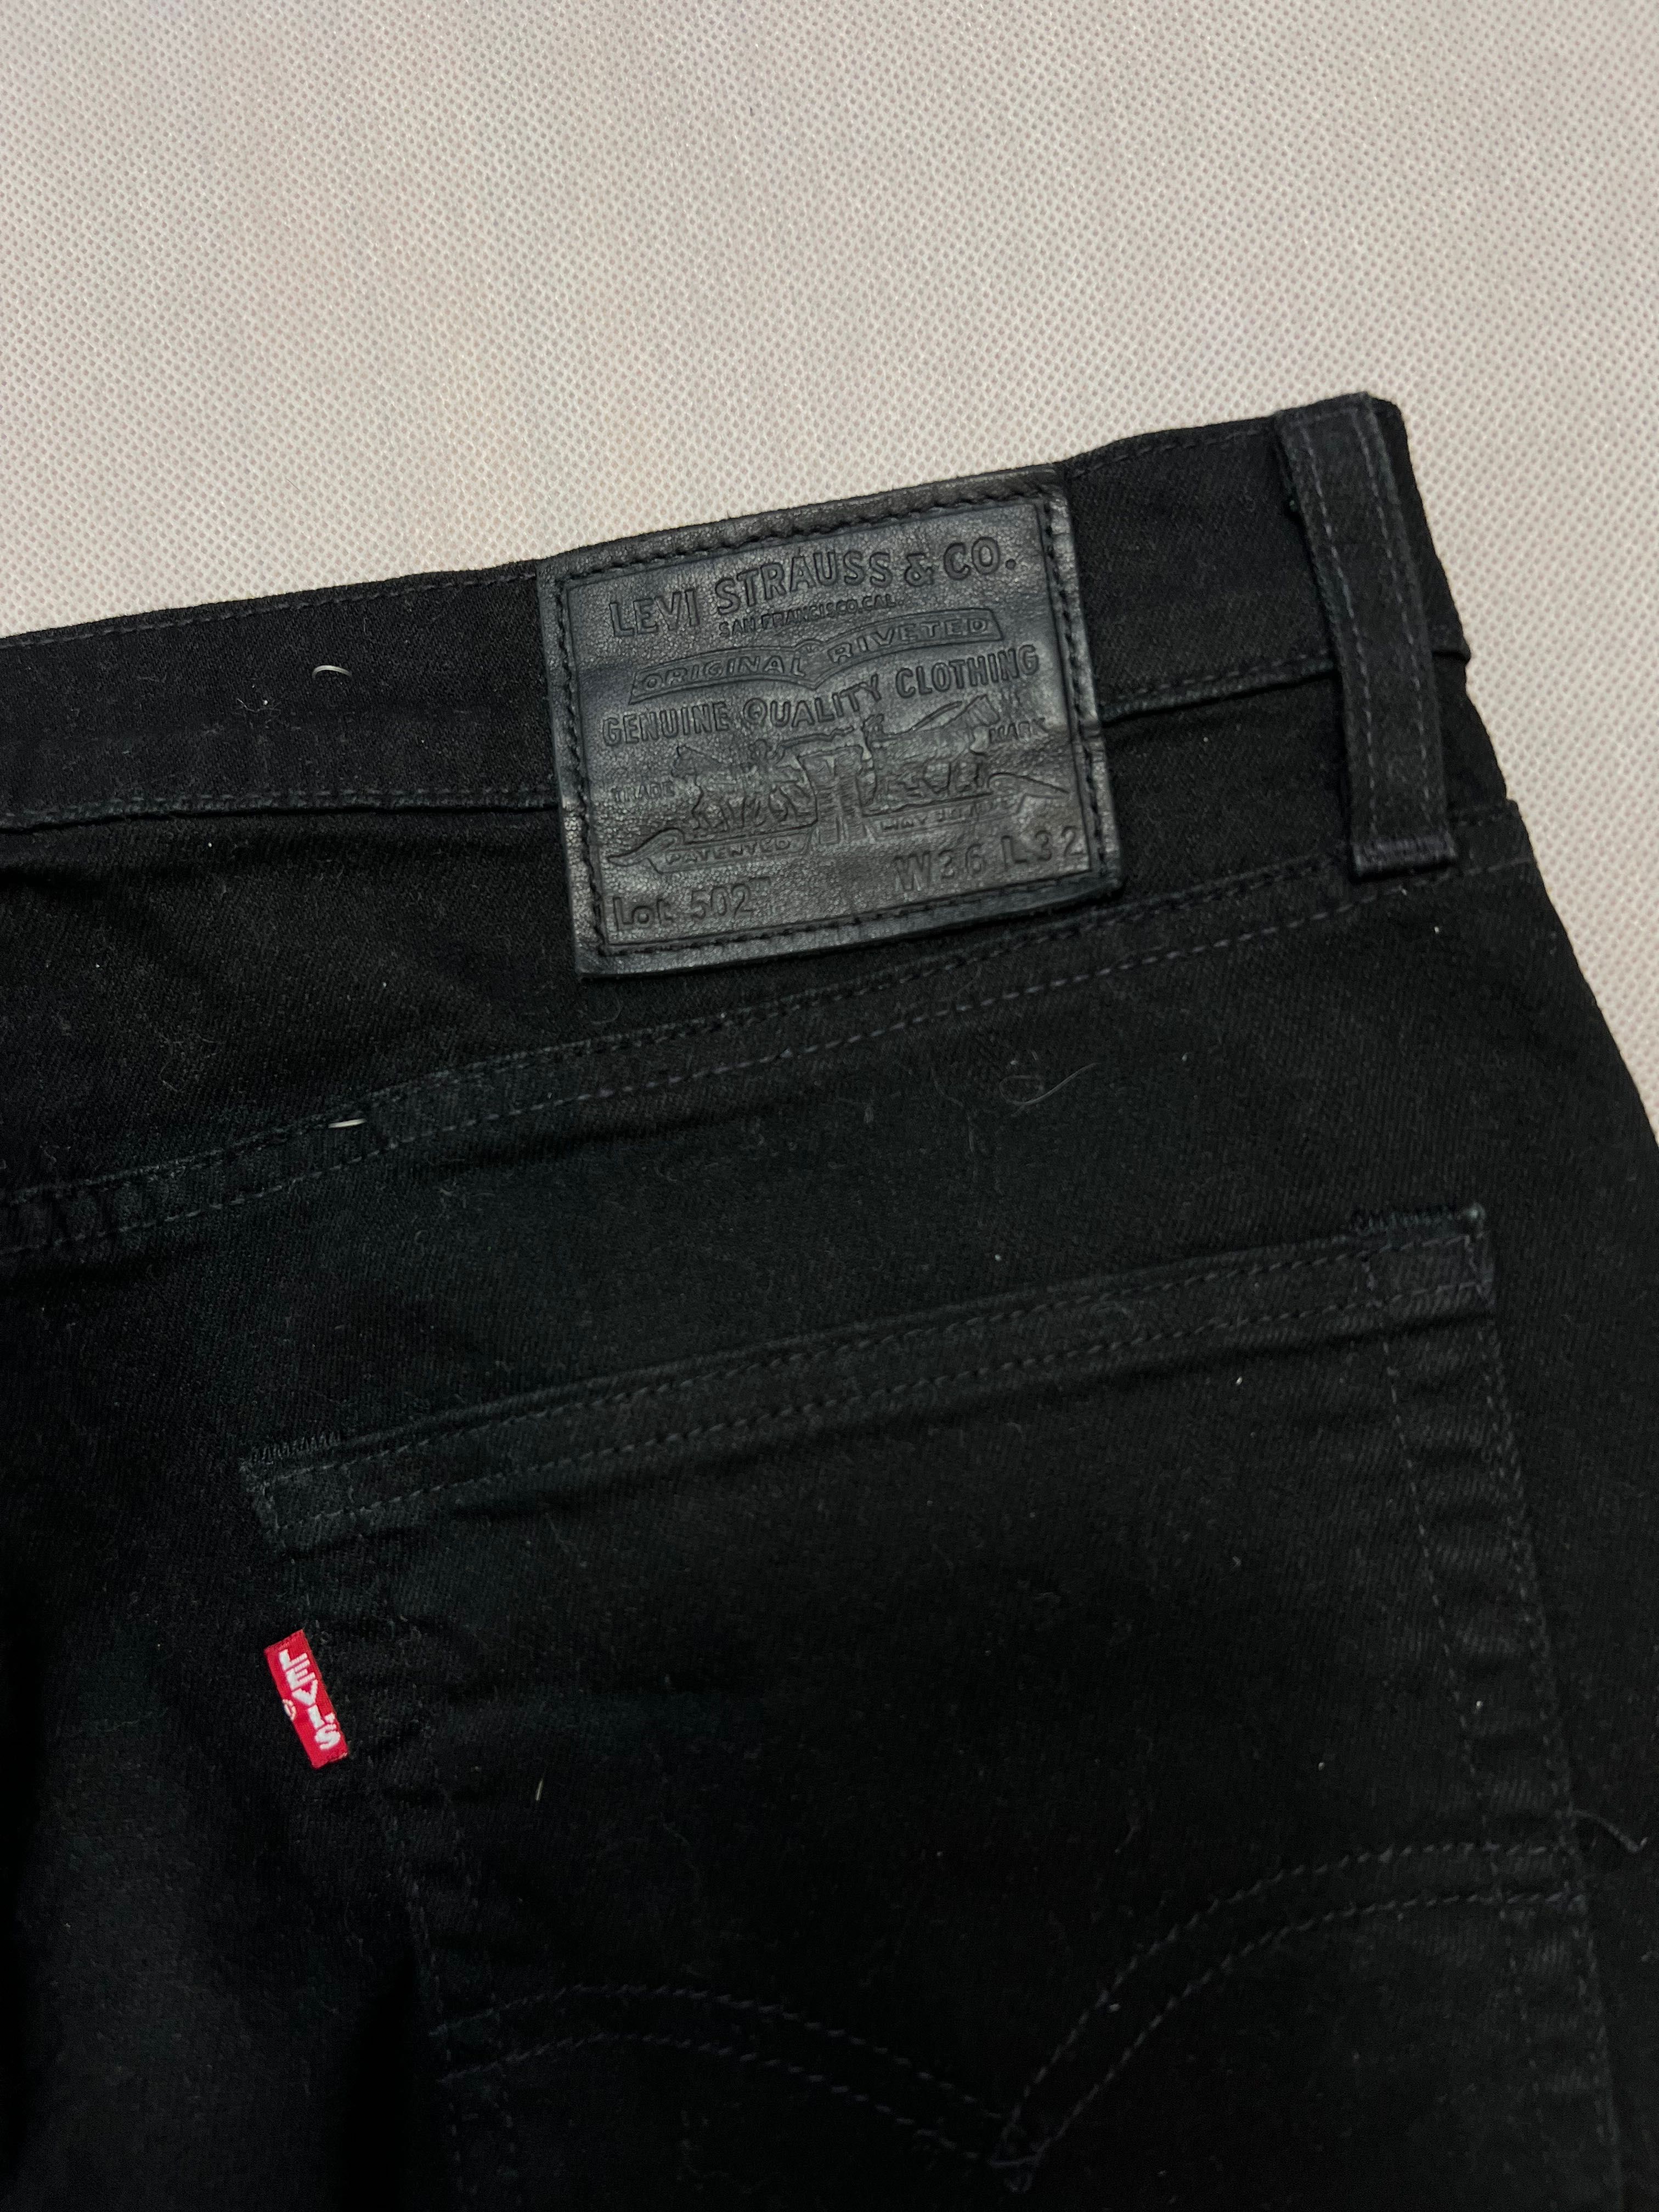 Spodnie Levi’s 502 black red tab pants